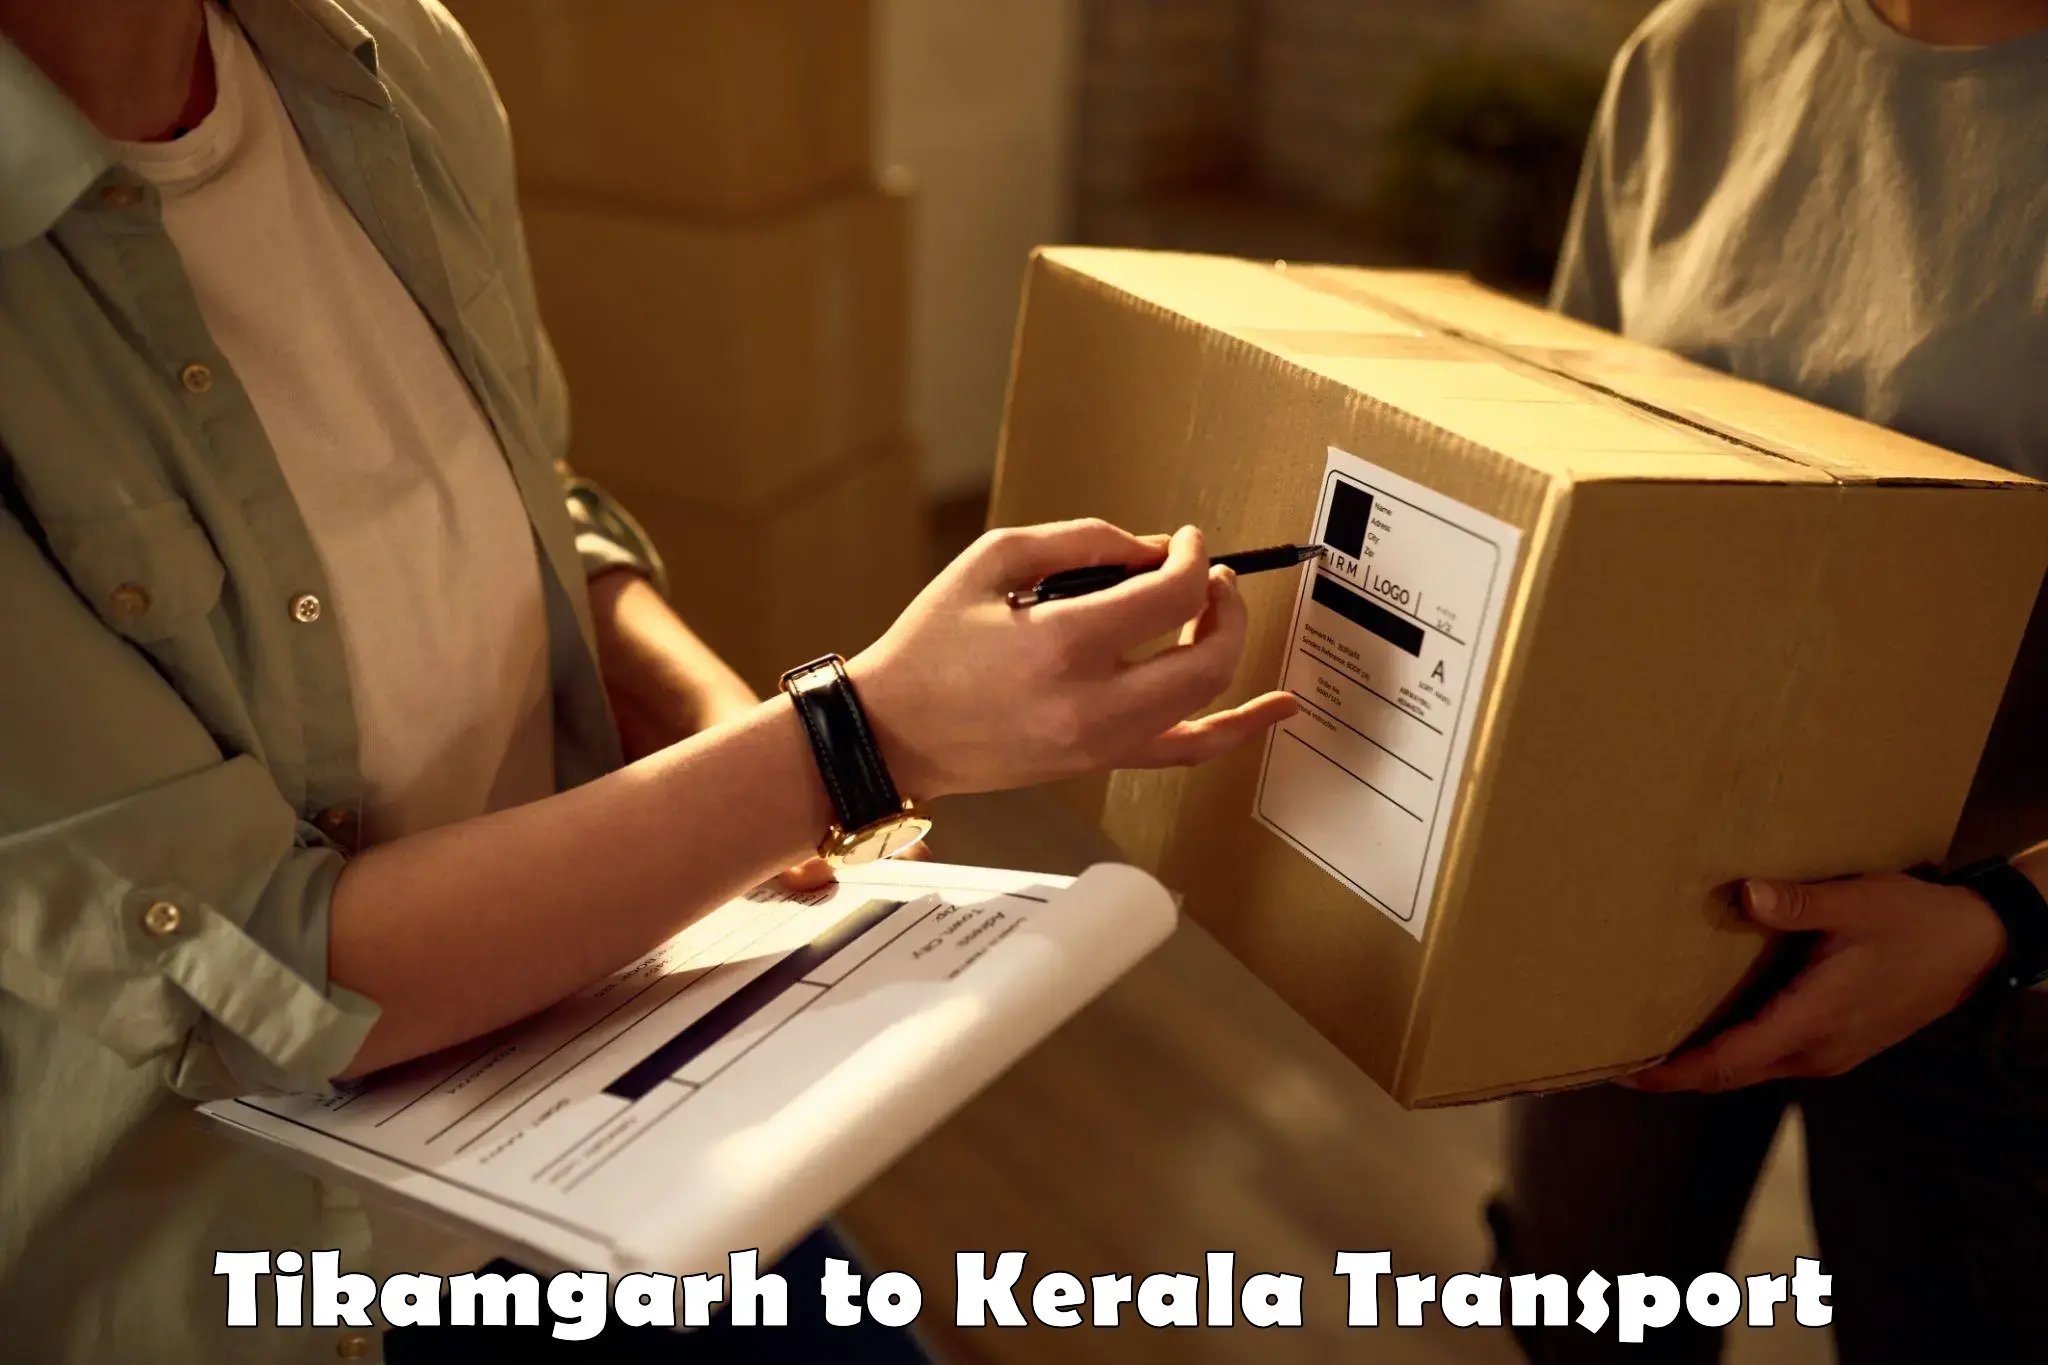 Delivery service Tikamgarh to Koothattukulam